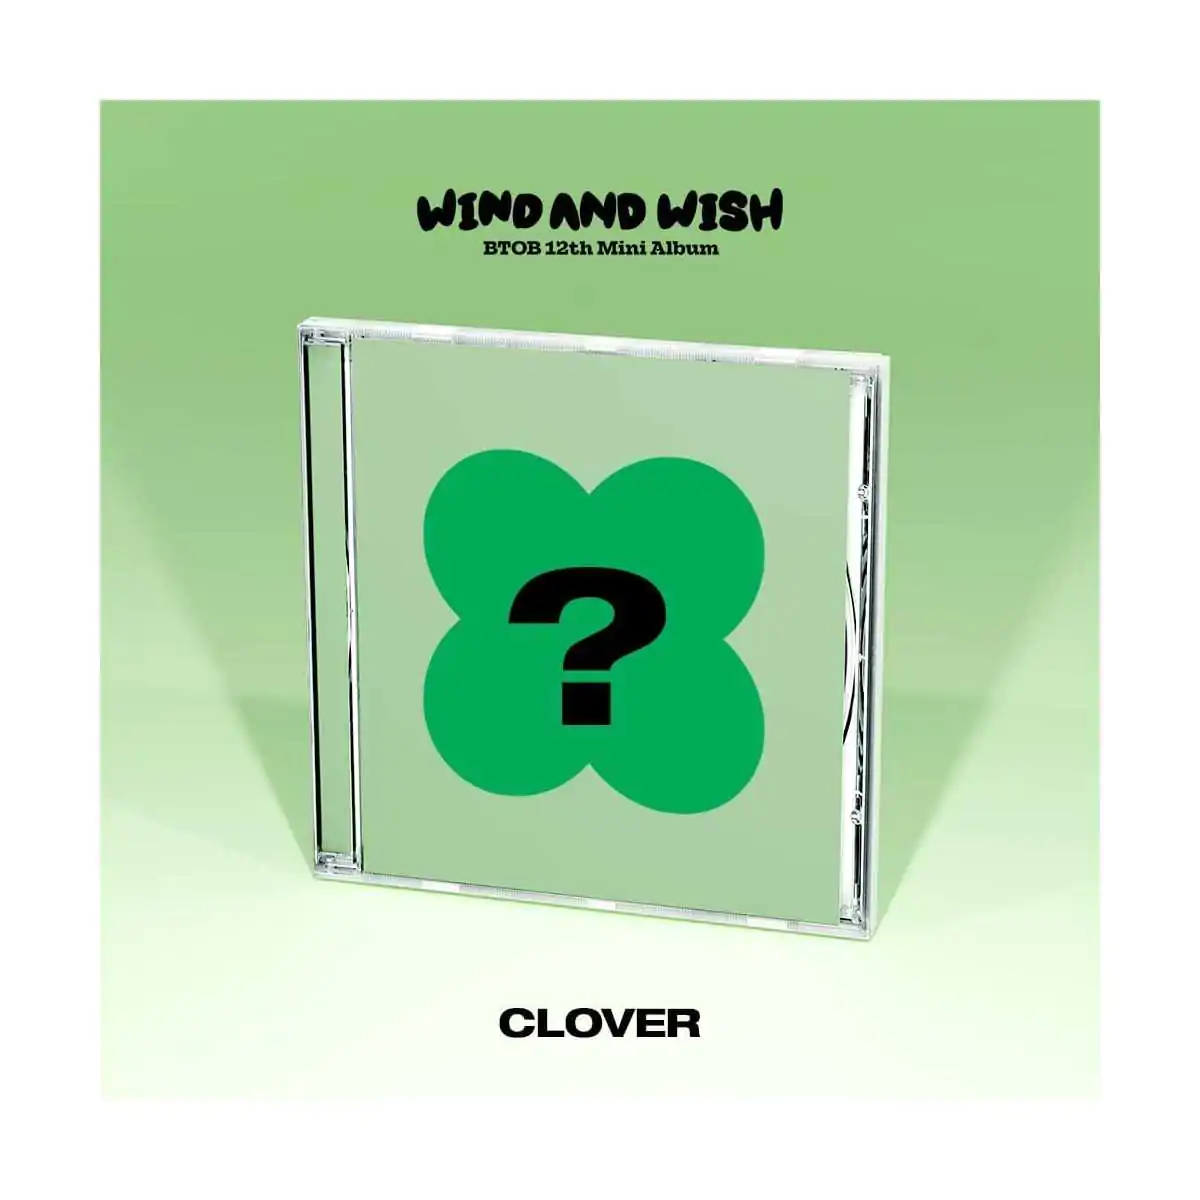 BTOB - WIND AND WISH (CLOVER Version) (12th Mini Album) 